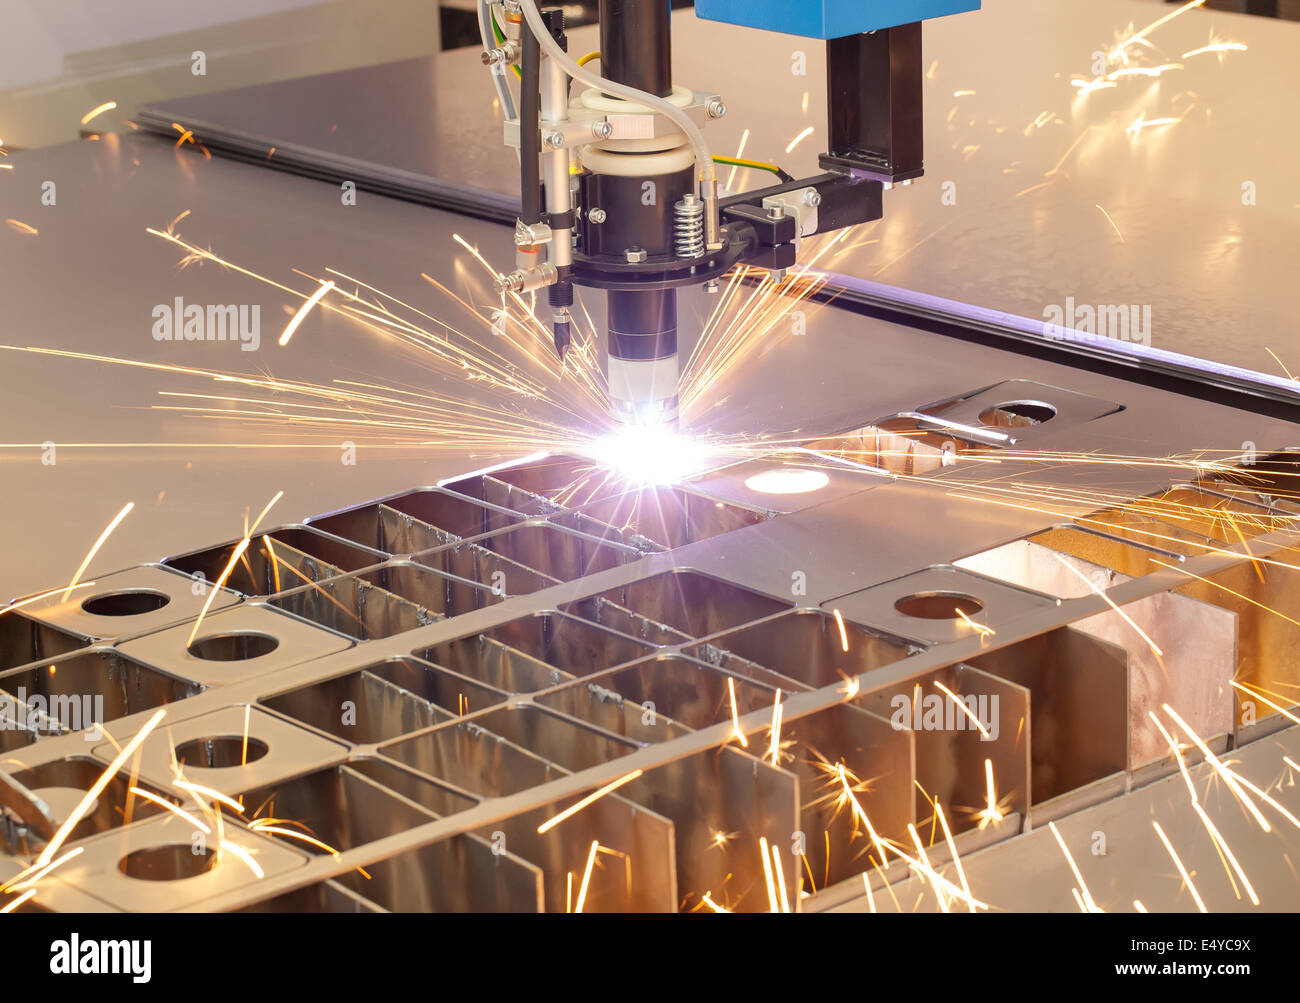 Plasma cutting metalwork industry machine Stock Photo